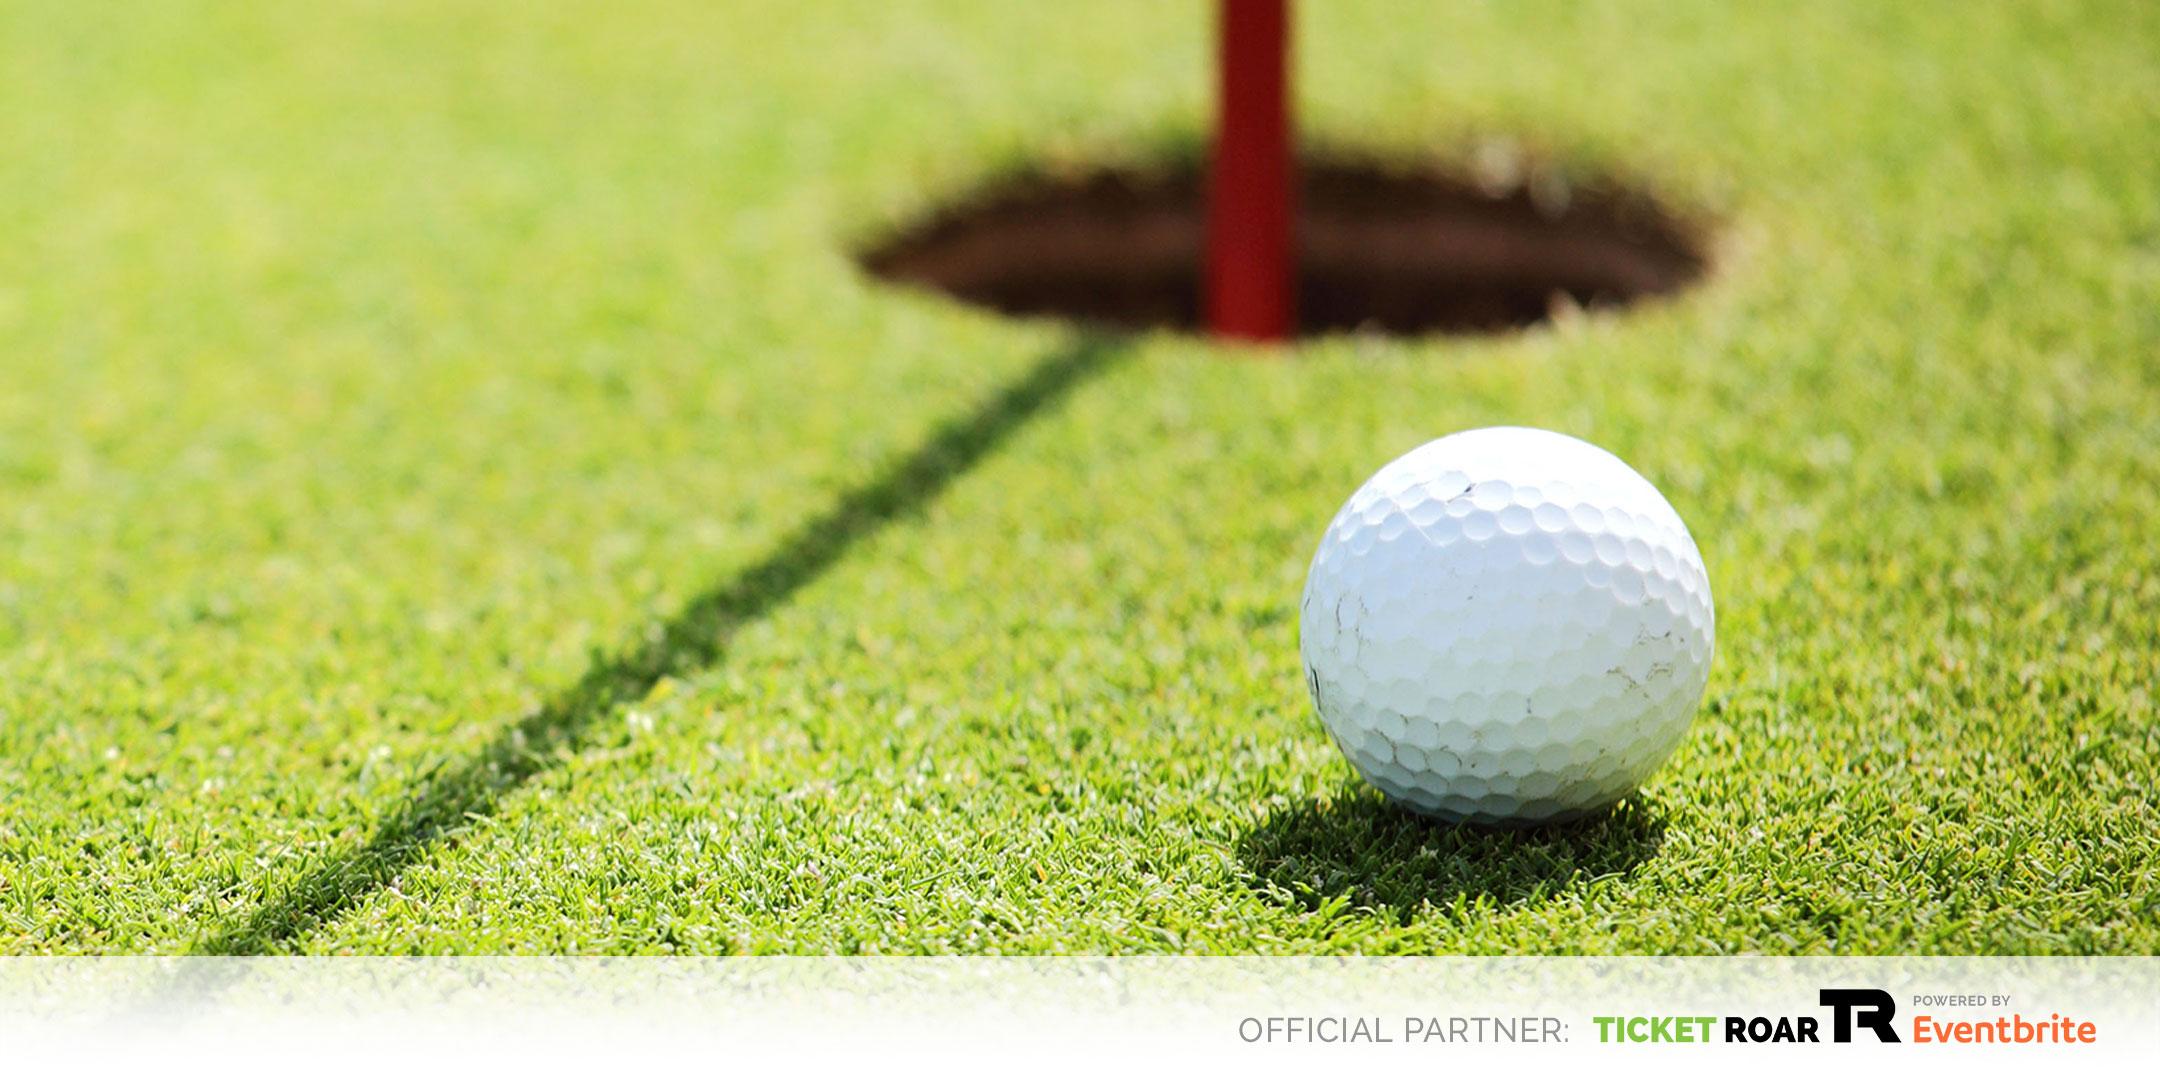 Providence Catholic School 2nd Annual Golf Tournament – Registration